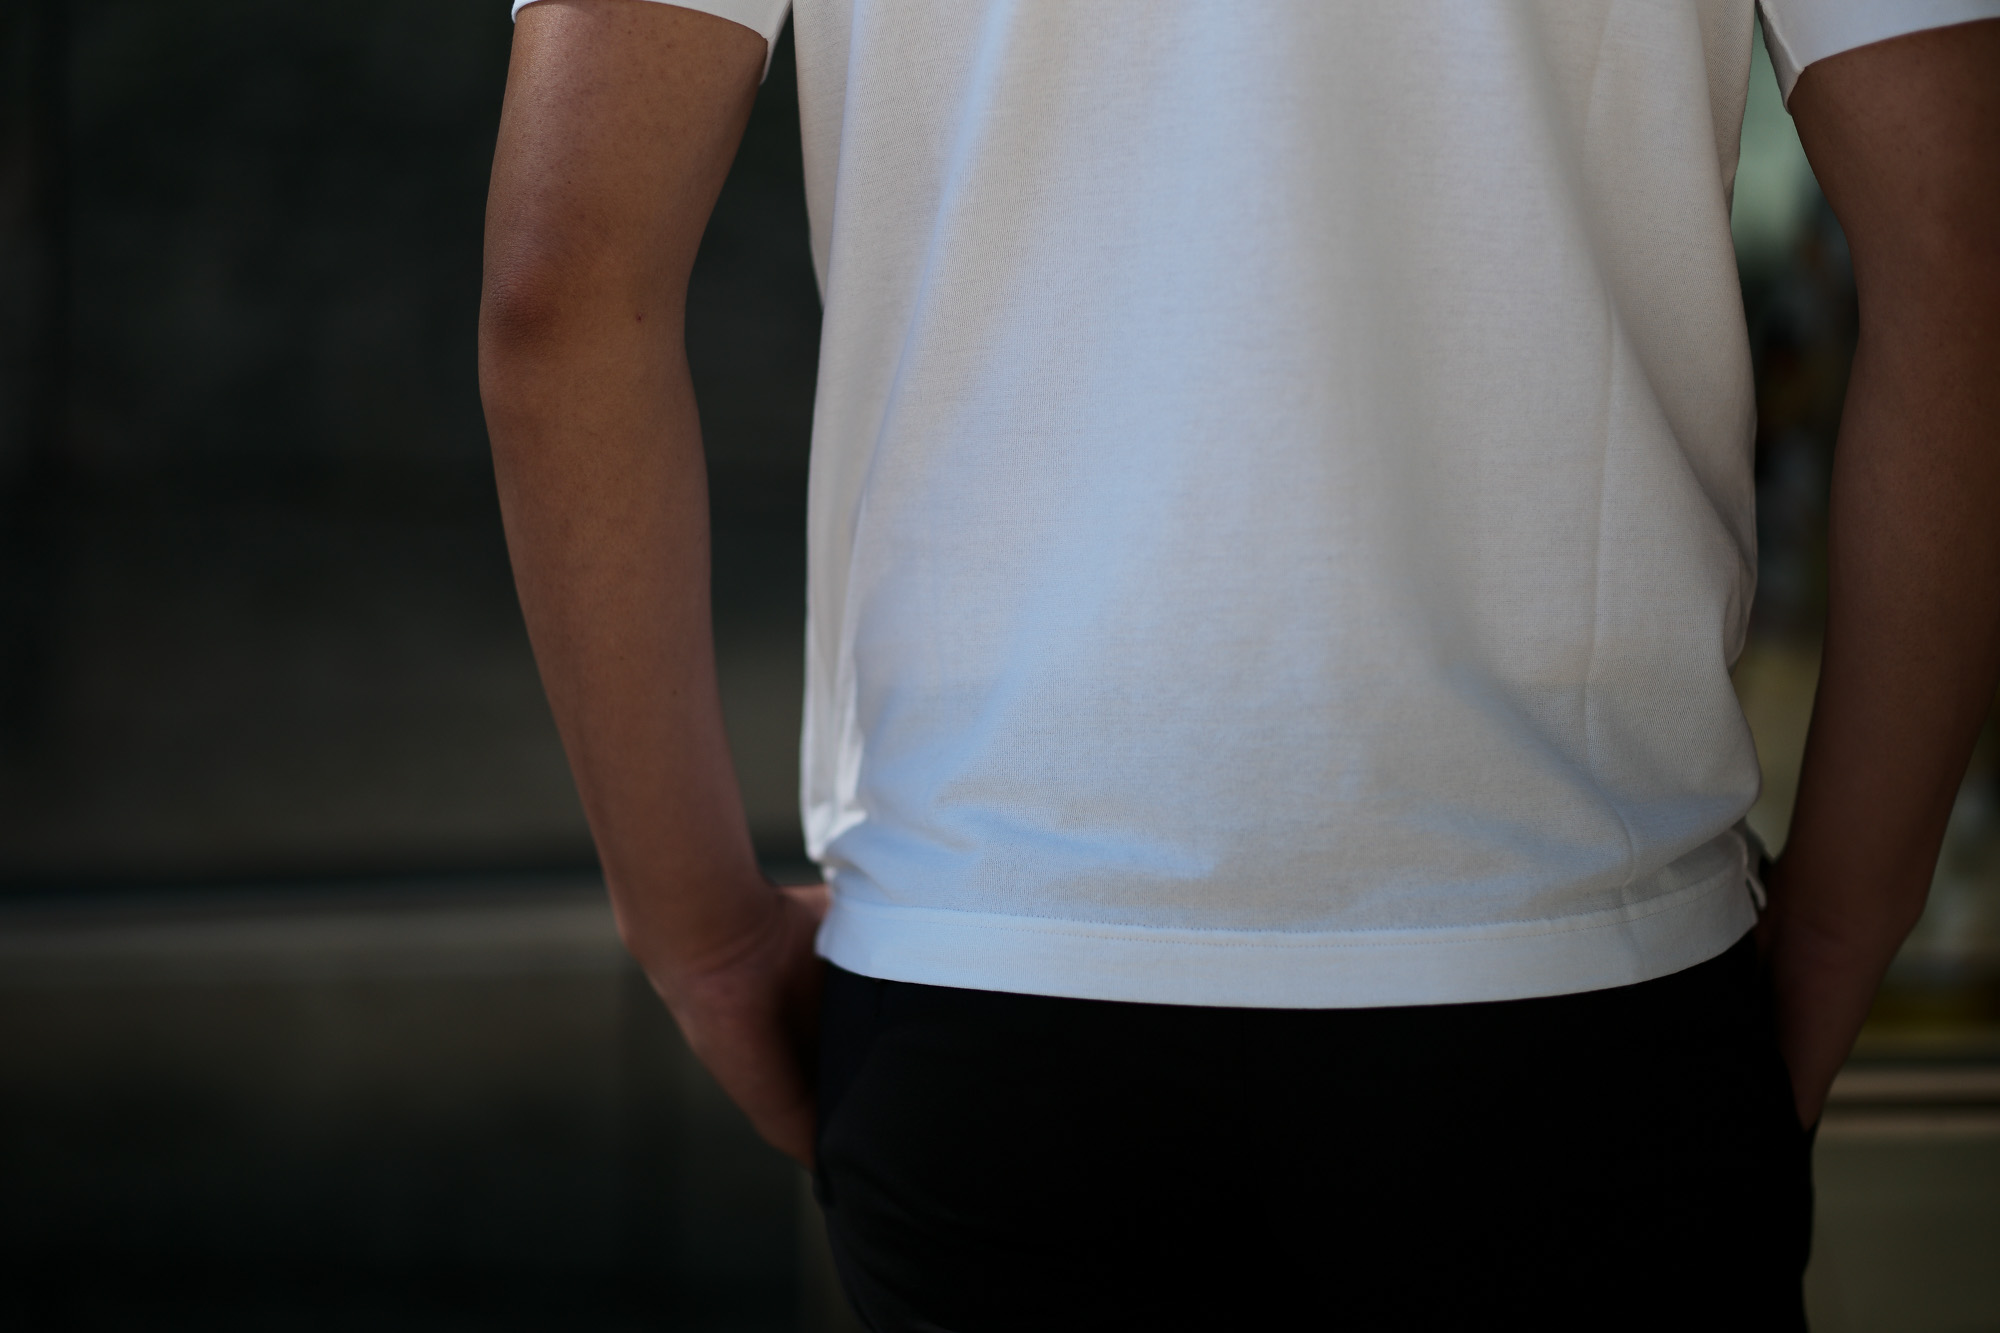 ZANONE (ザノーネ) Crew Neck T-shirt (クルーネックTシャツ) ice cotton アイスコットン Tシャツ WHITE (ホワイト・Z0001) MADE IN ITALY(イタリア製) 2019 春夏新作 愛知 名古屋 altoediritto アルトエデリット